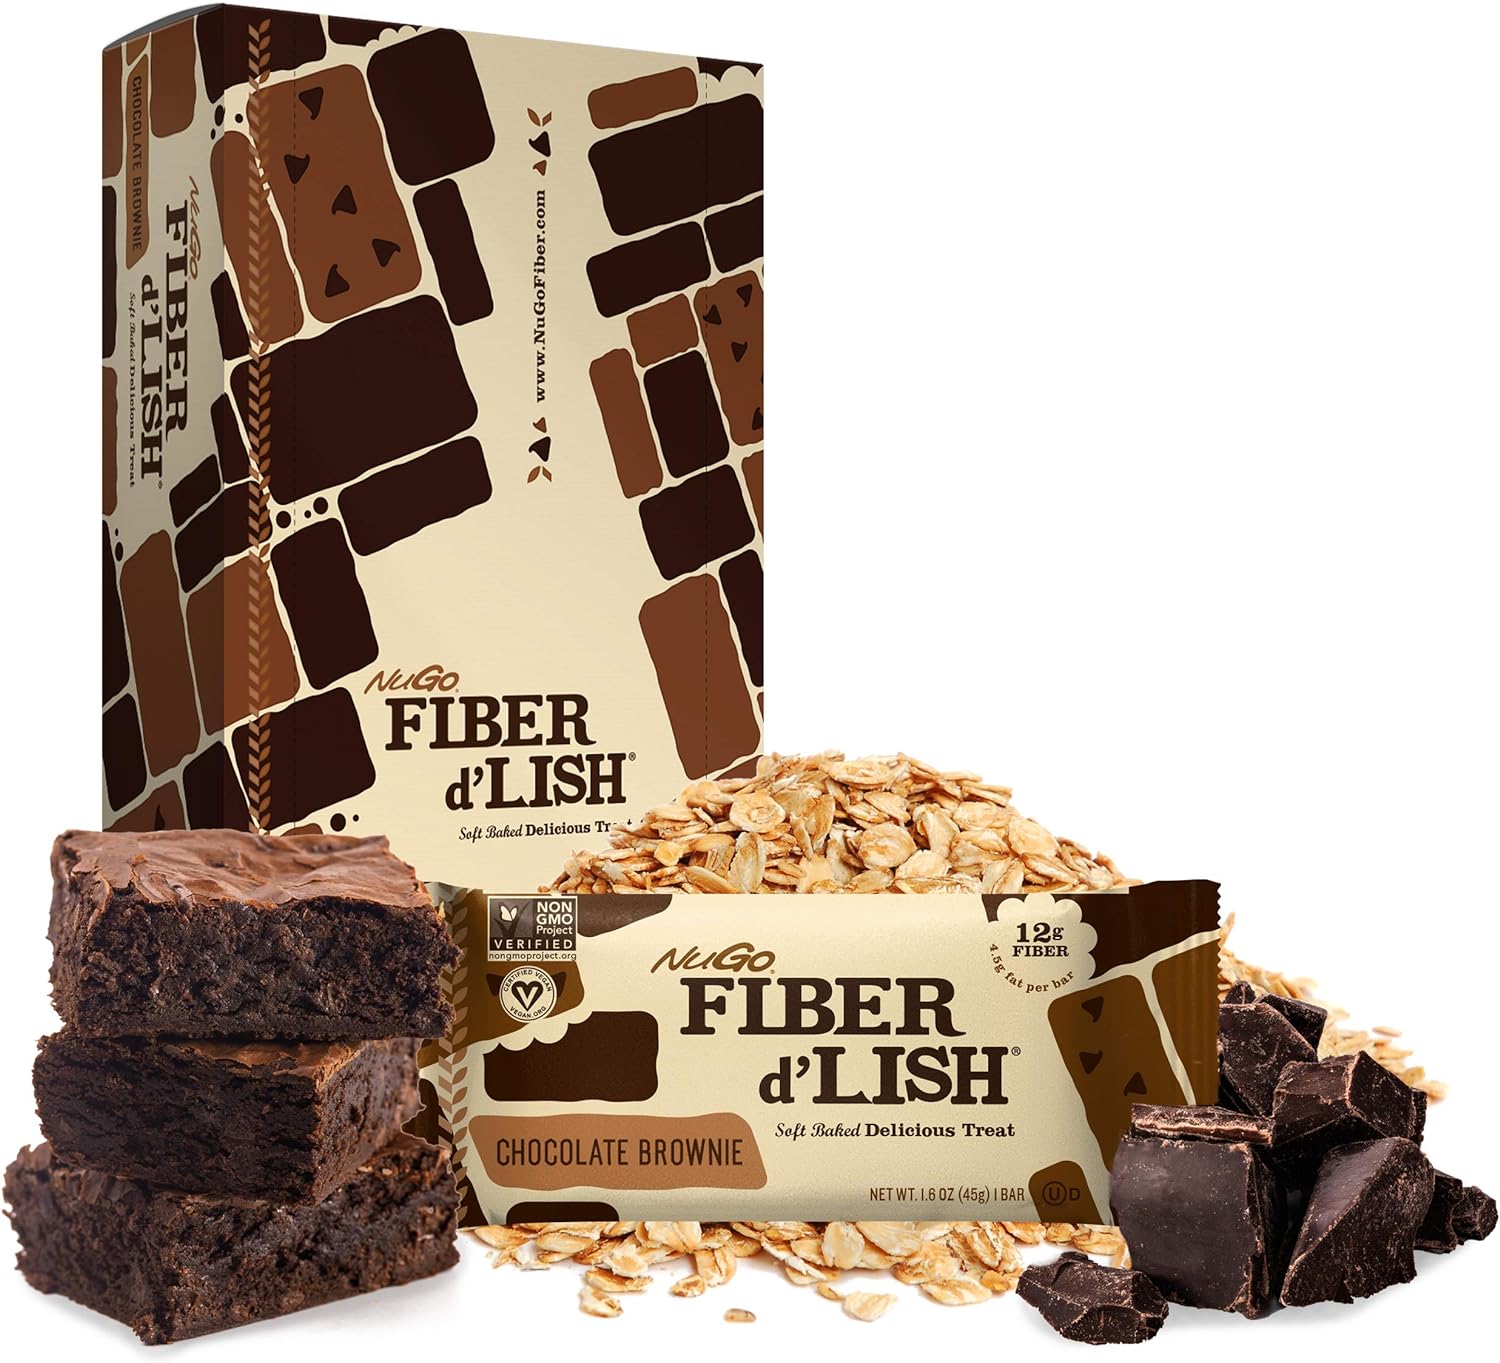 NuGo Fiber d'Lish Chocolate Brownie, 12g High Fiber, Vegan,